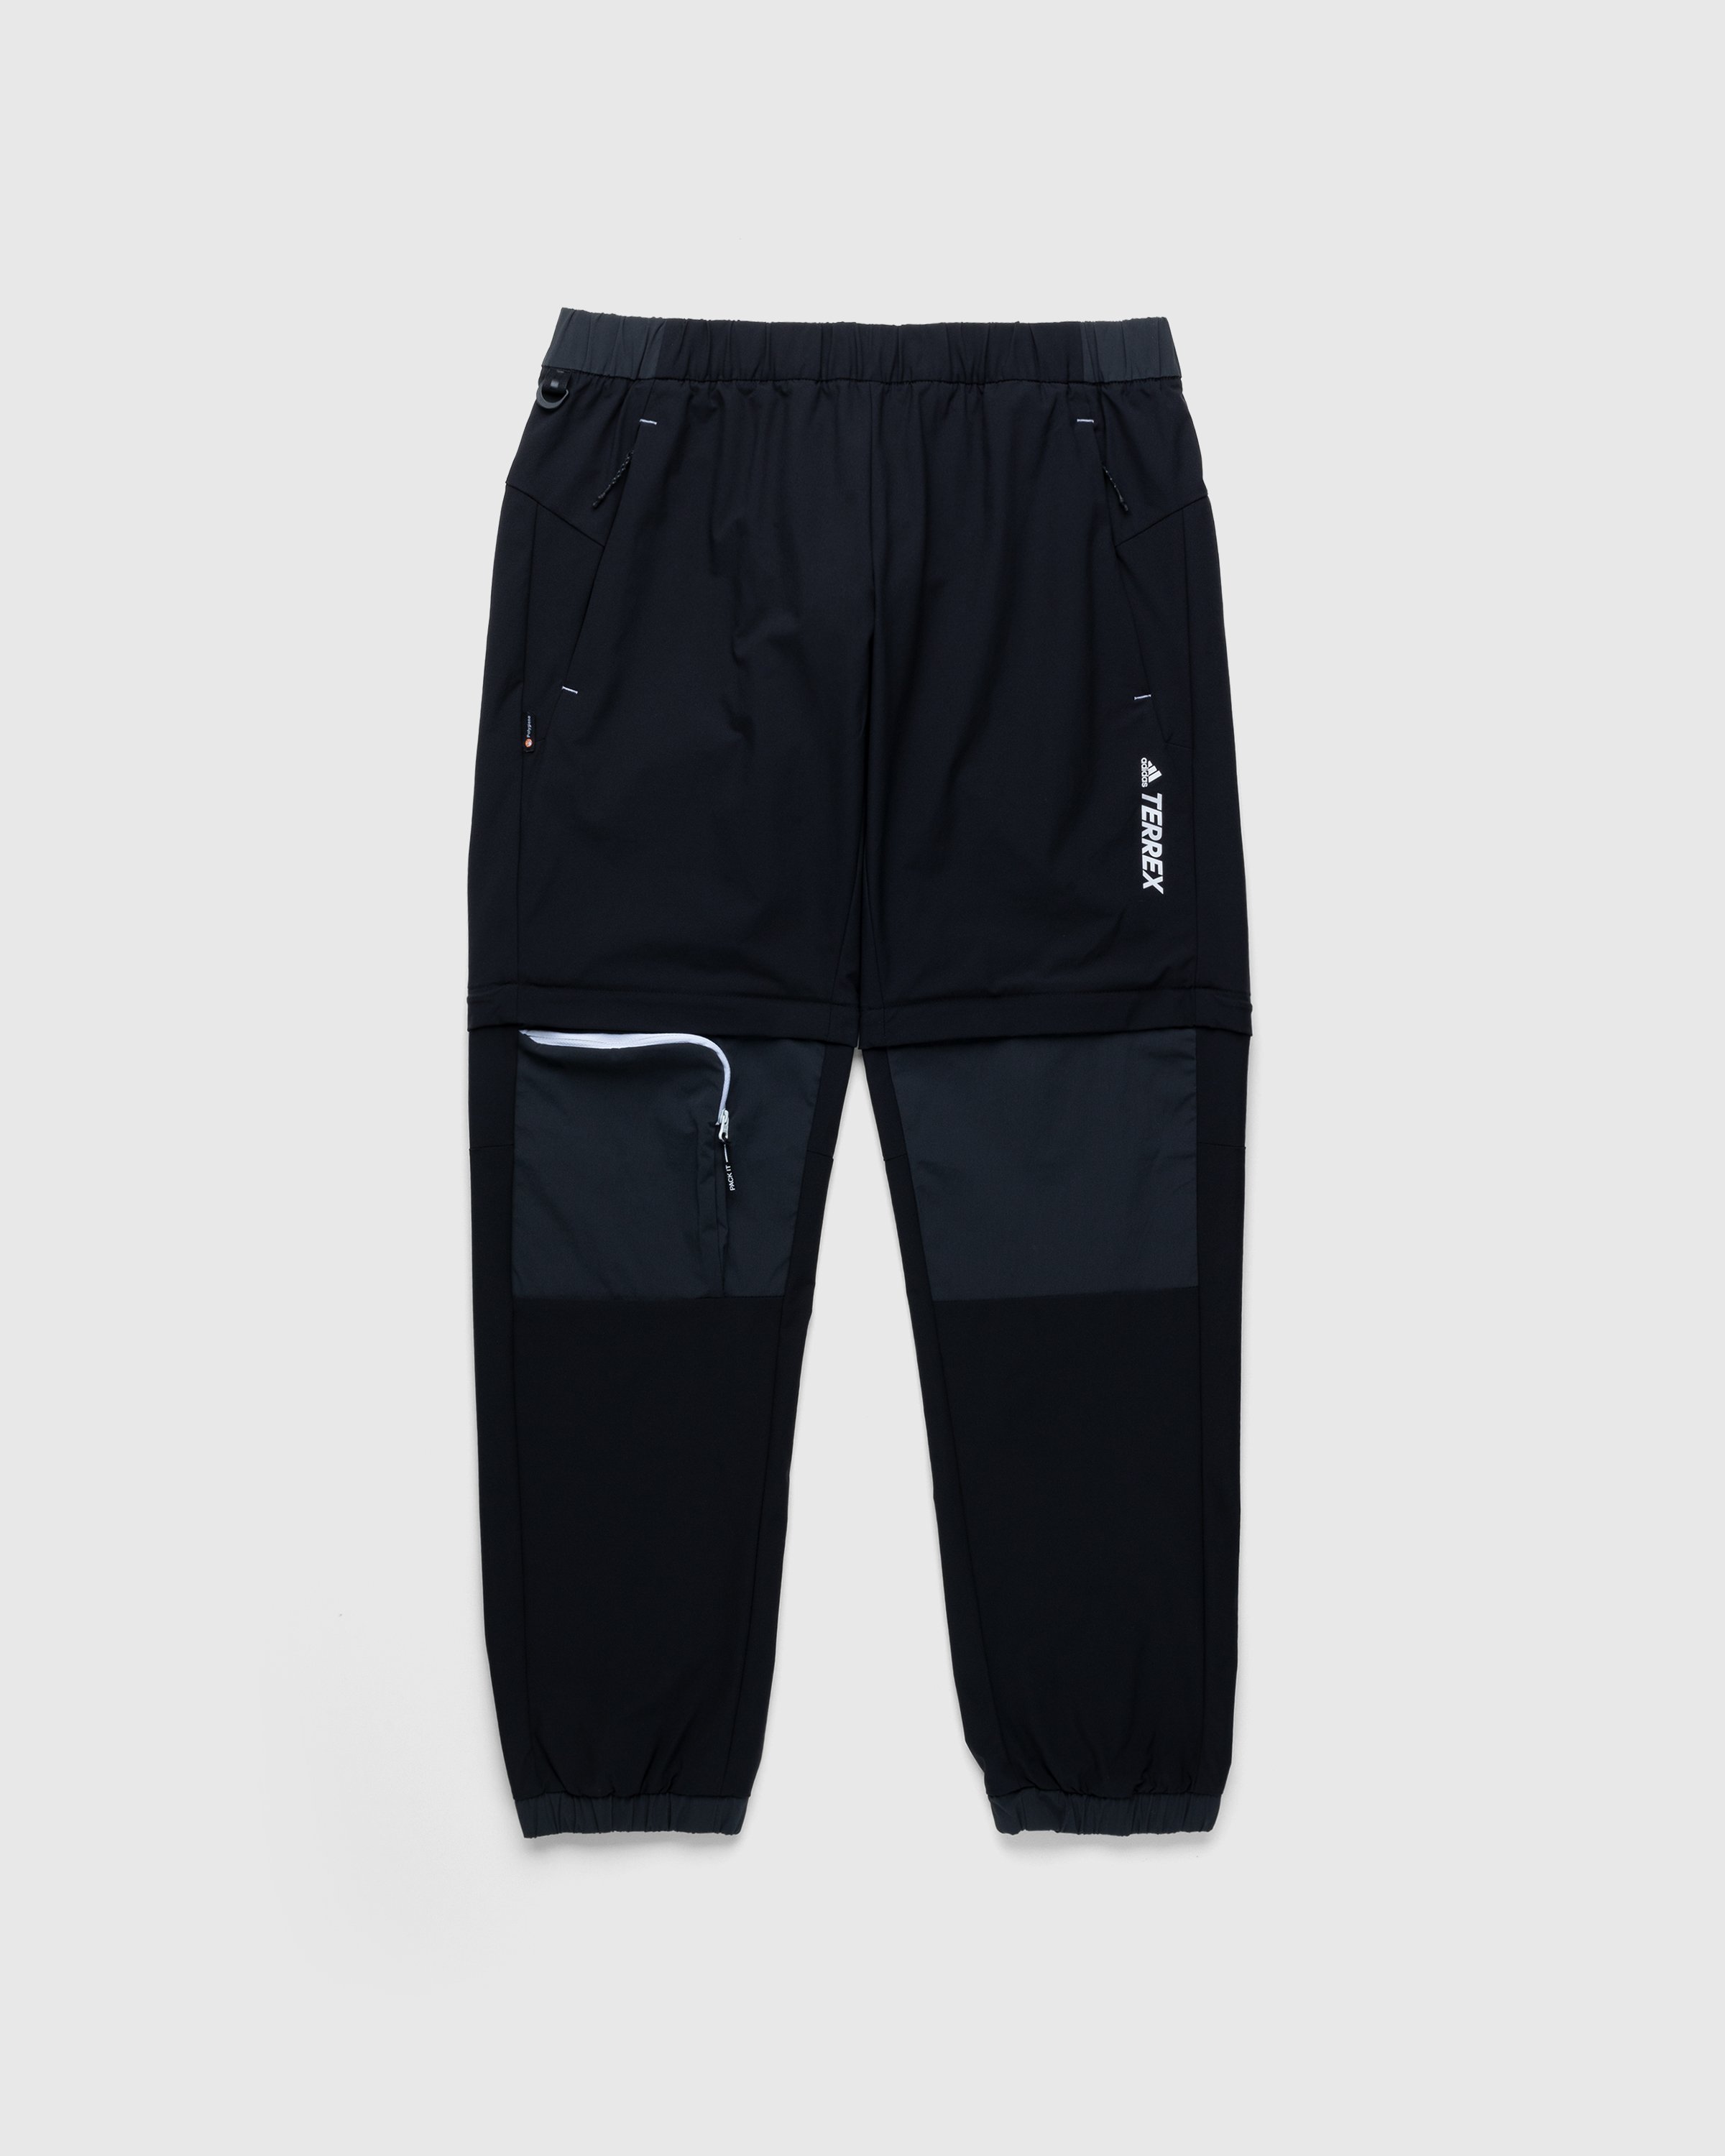 Adidas - Voyager Pants Black/Carbon - Clothing - Black - Image 1